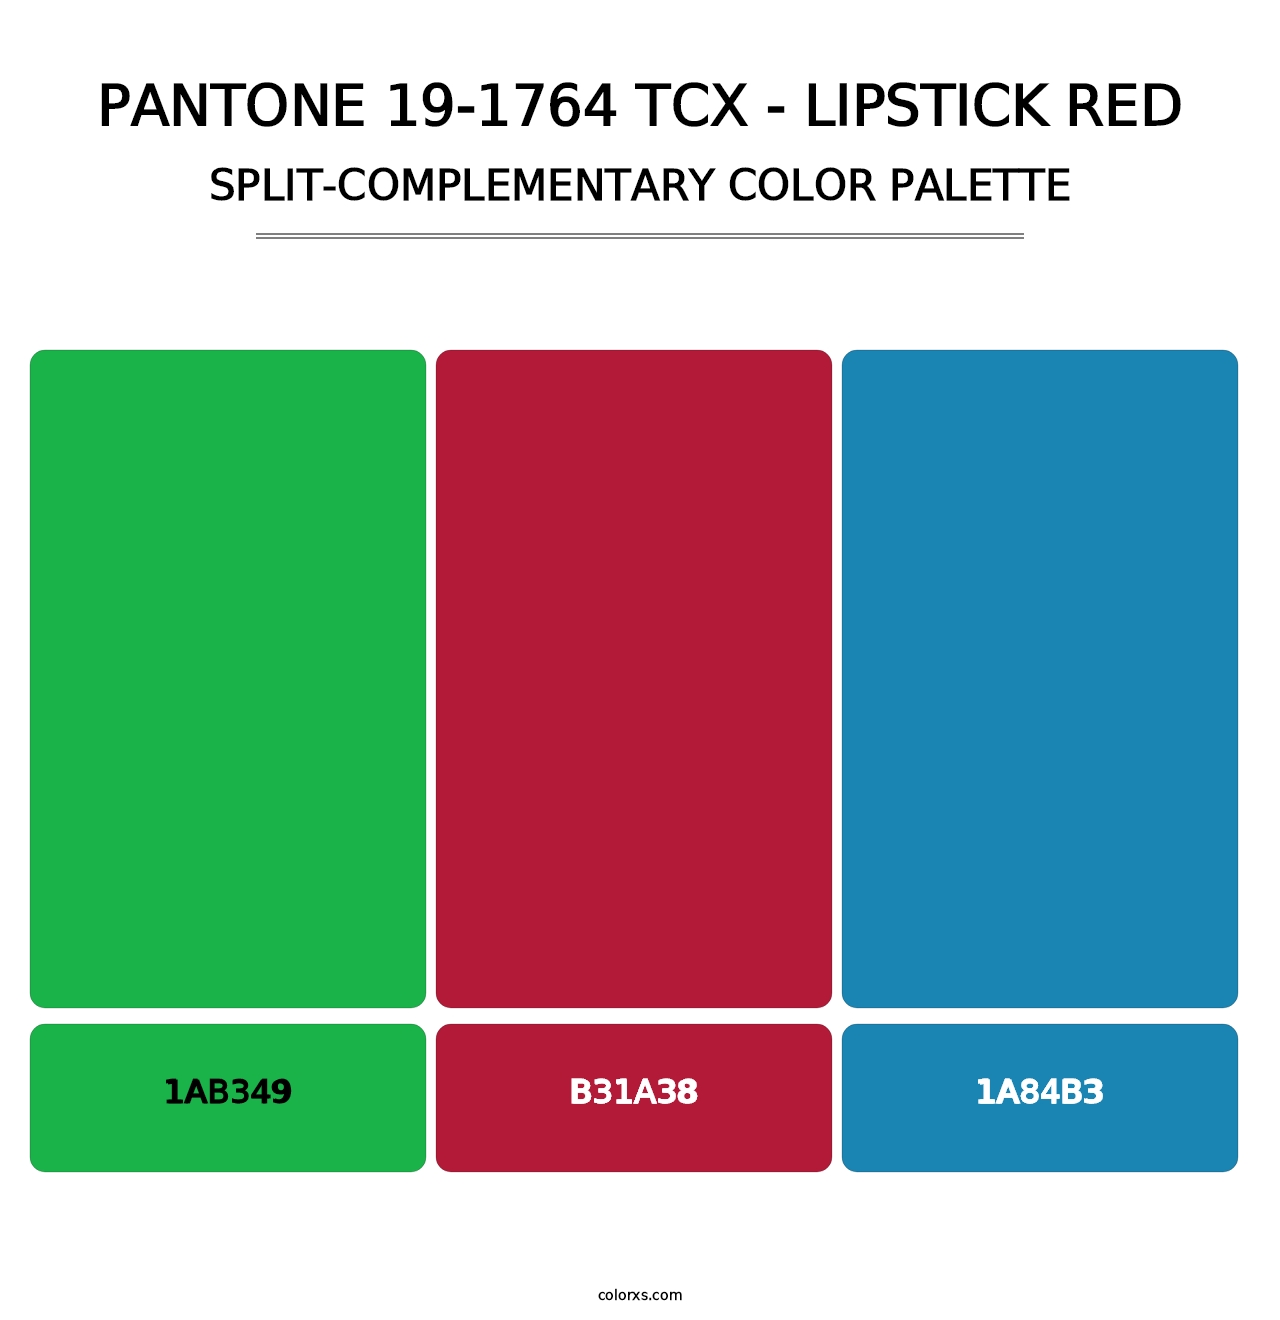 PANTONE 19-1764 TCX - Lipstick Red - Split-Complementary Color Palette